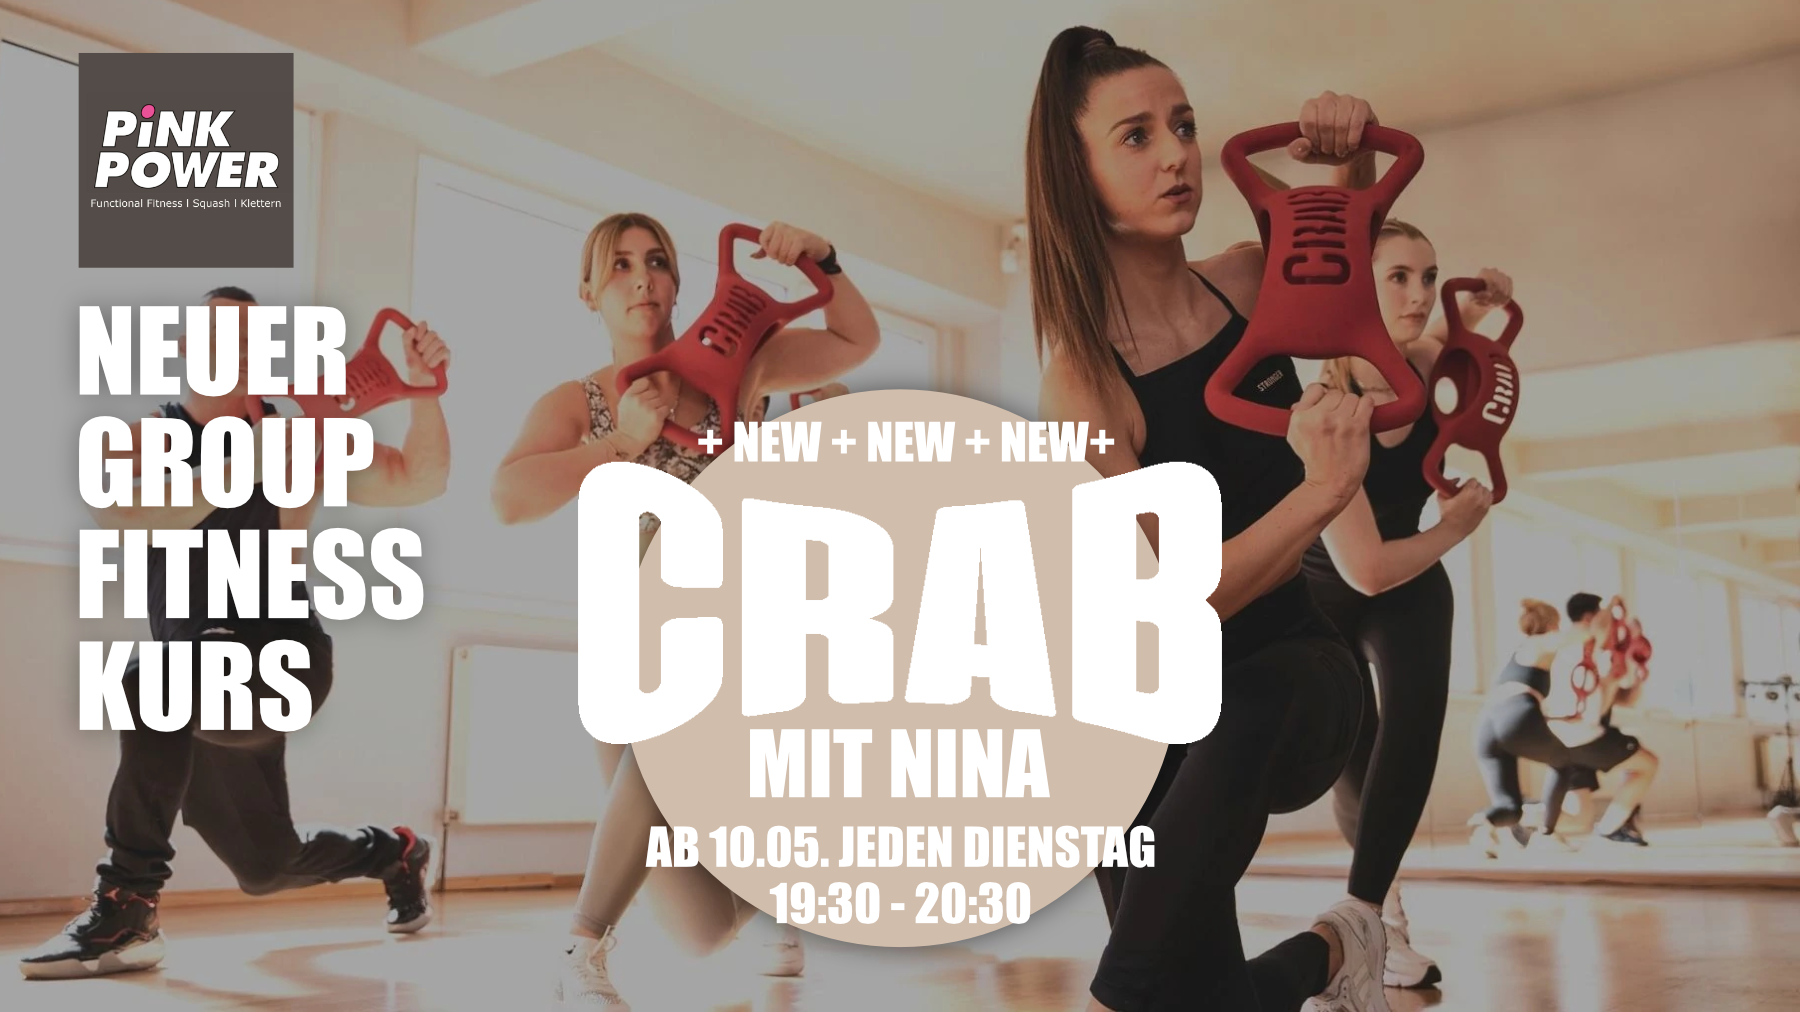 Neuer Group Fitness Kurs: Crab im Pink Power